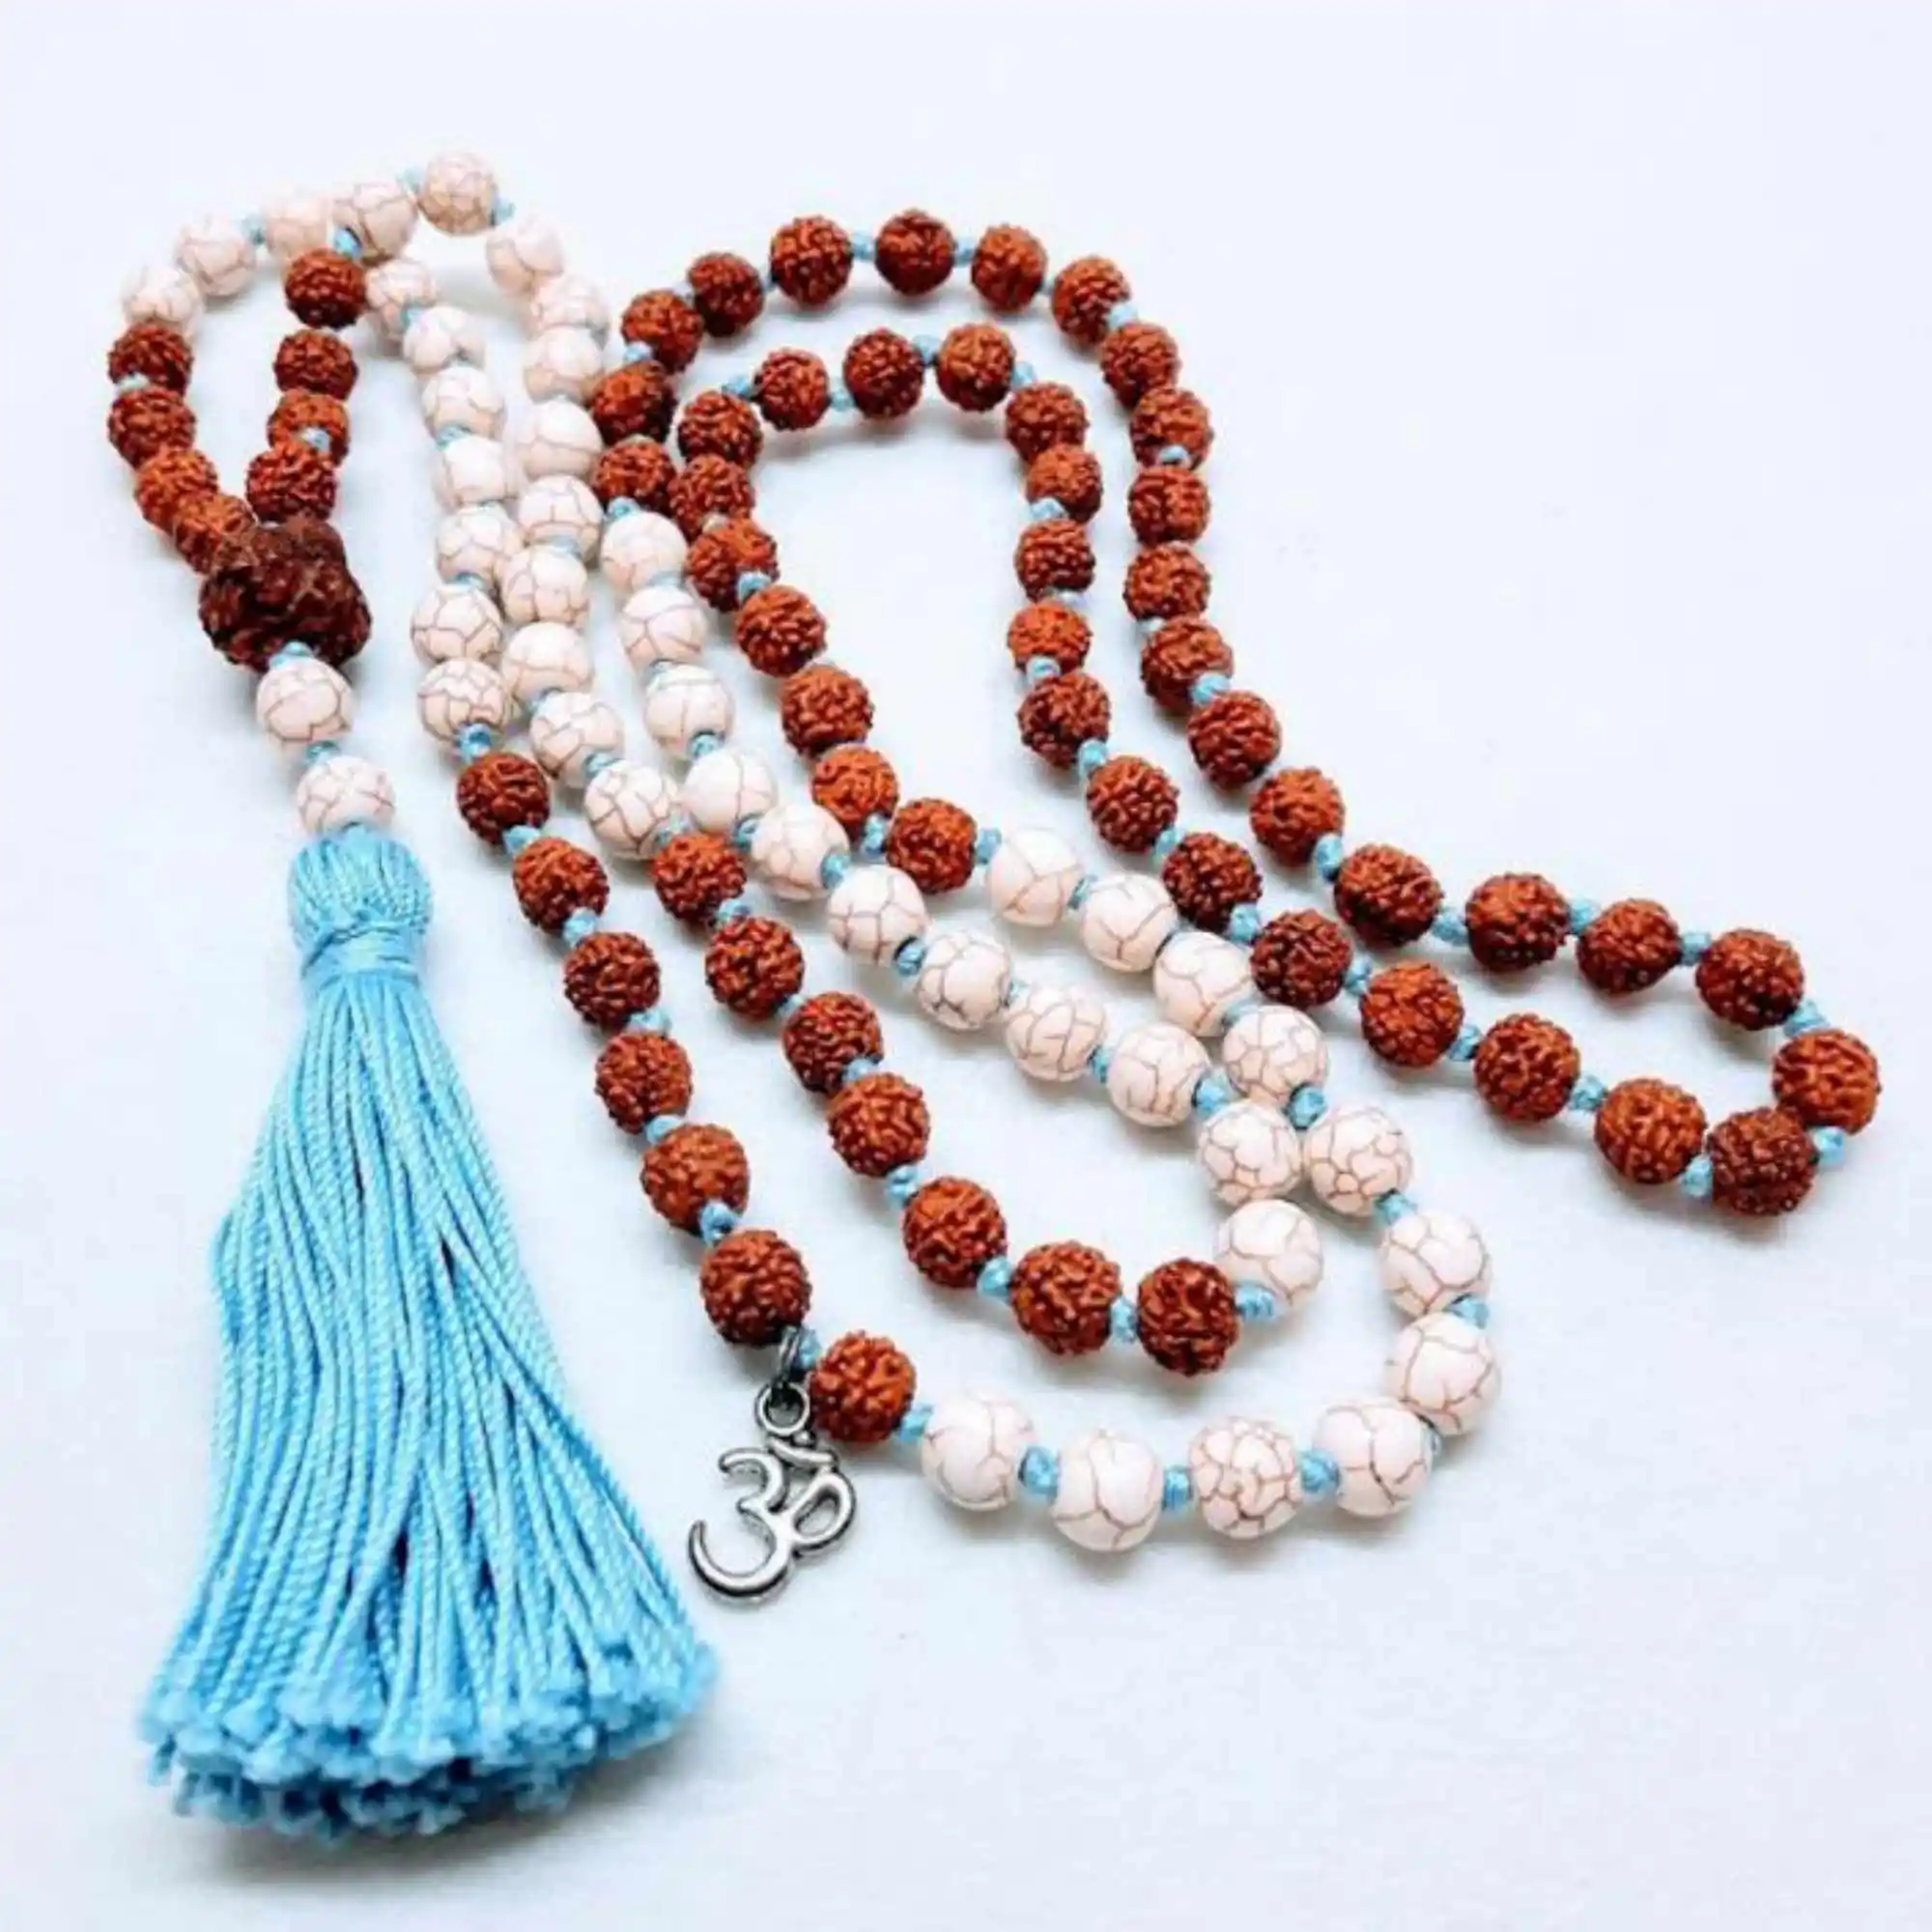 

8mm Natural Rudraksha howlita white turquoise beads necklace Inspiration Taseel Yoga Easter Healing Elegant Wrist Relief Energy